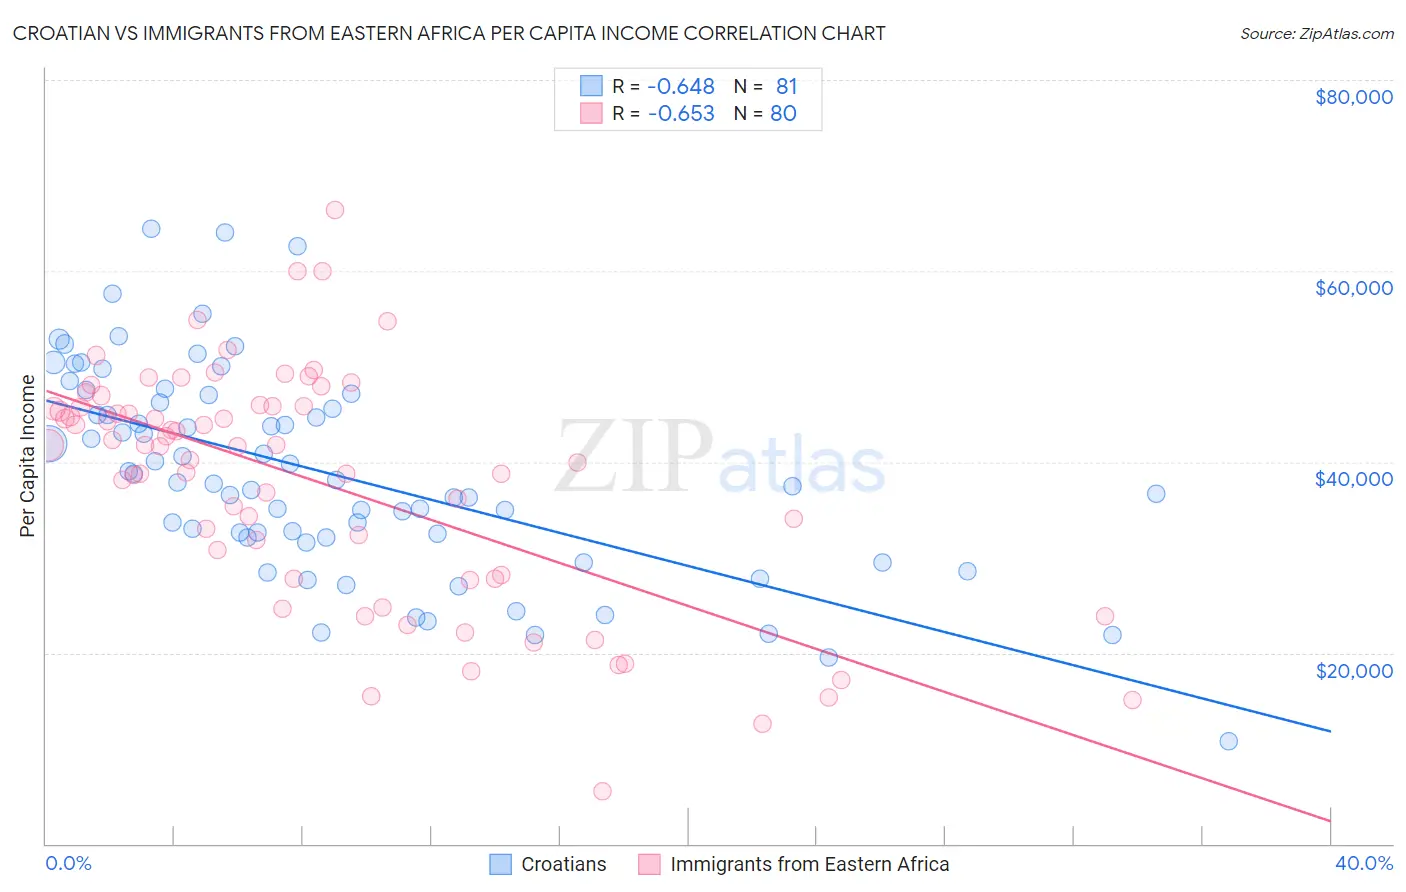 Croatian vs Immigrants from Eastern Africa Per Capita Income